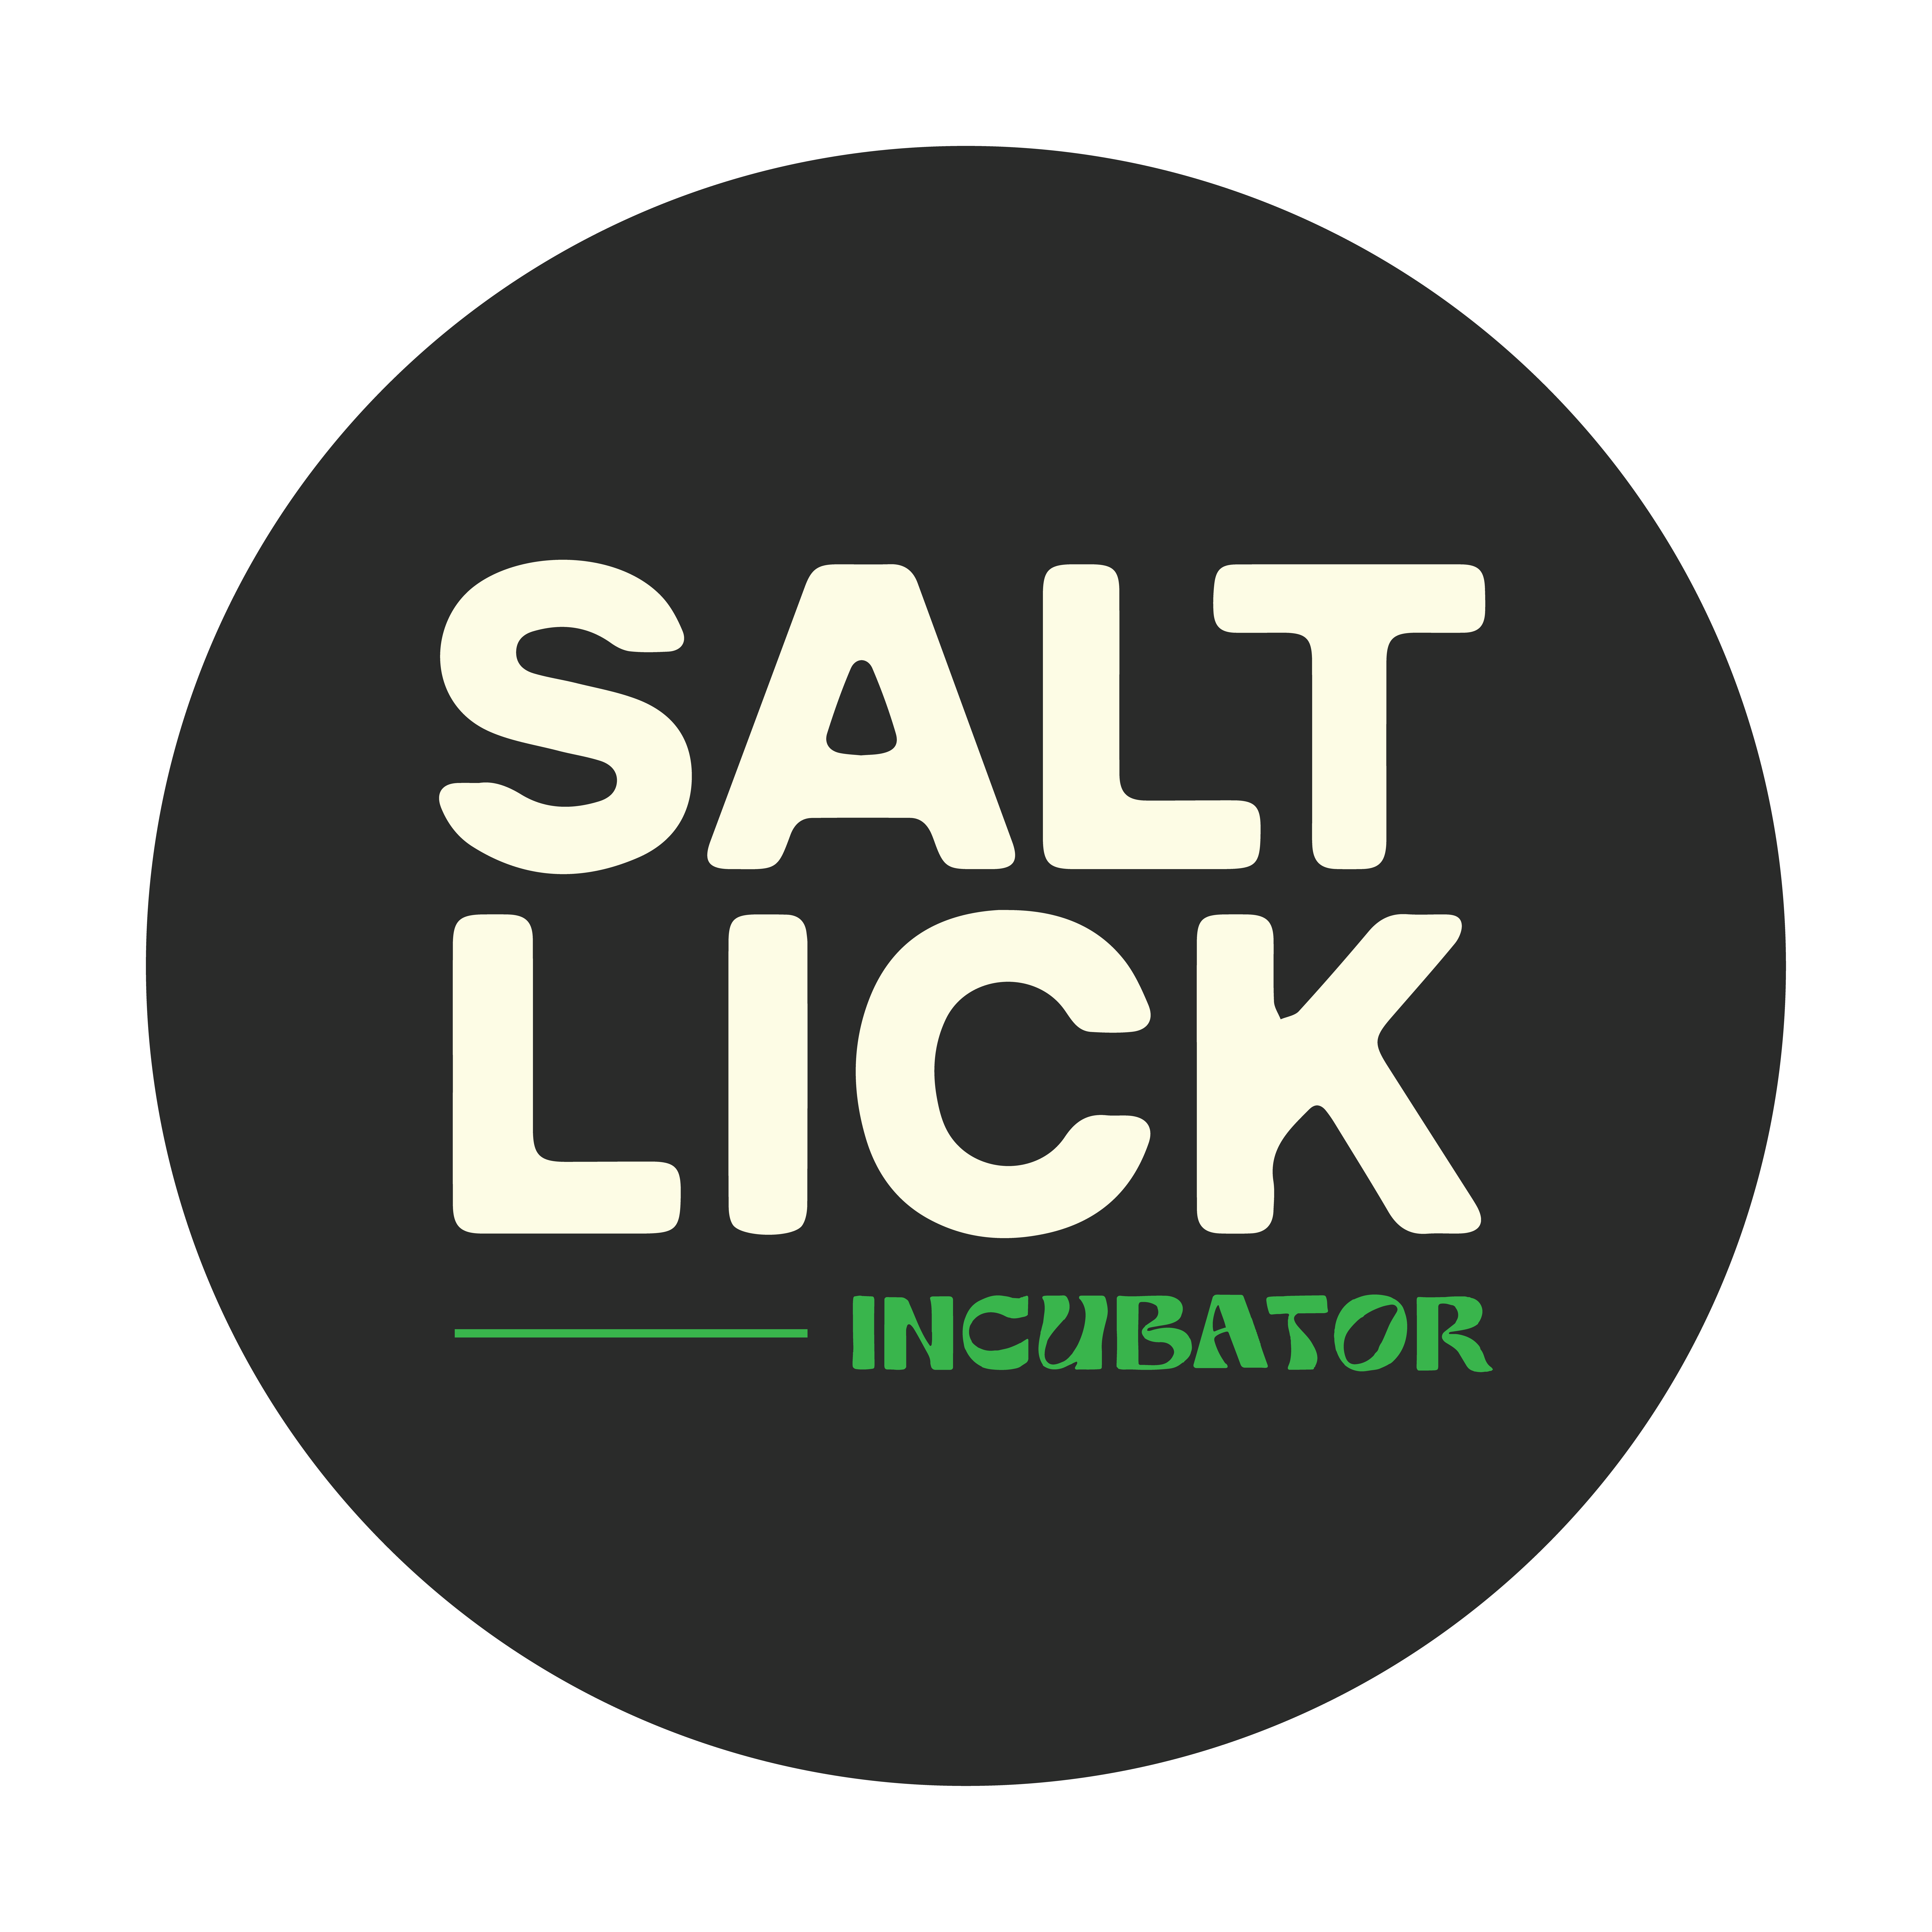 Text logo for Salt Lick Incubator